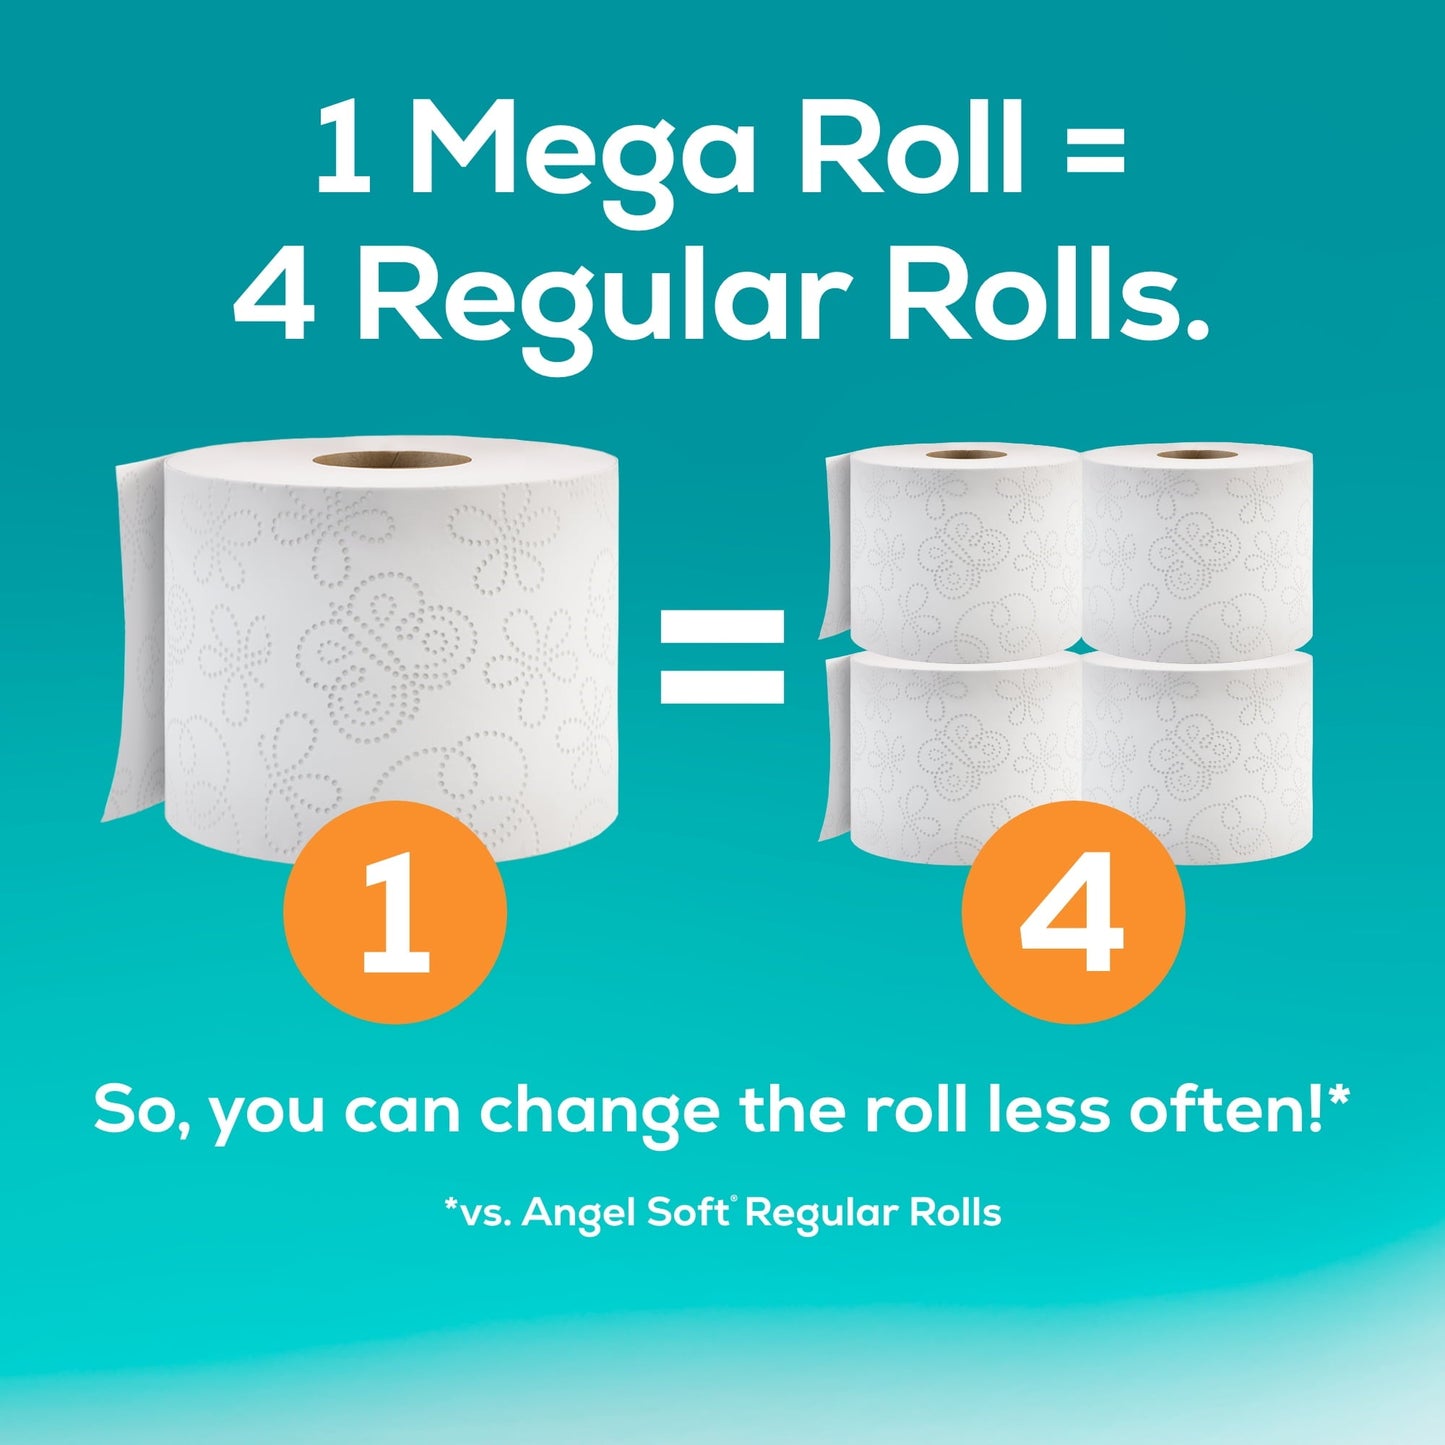 Angel Soft Toilet Paper, 9 Mega Rolls